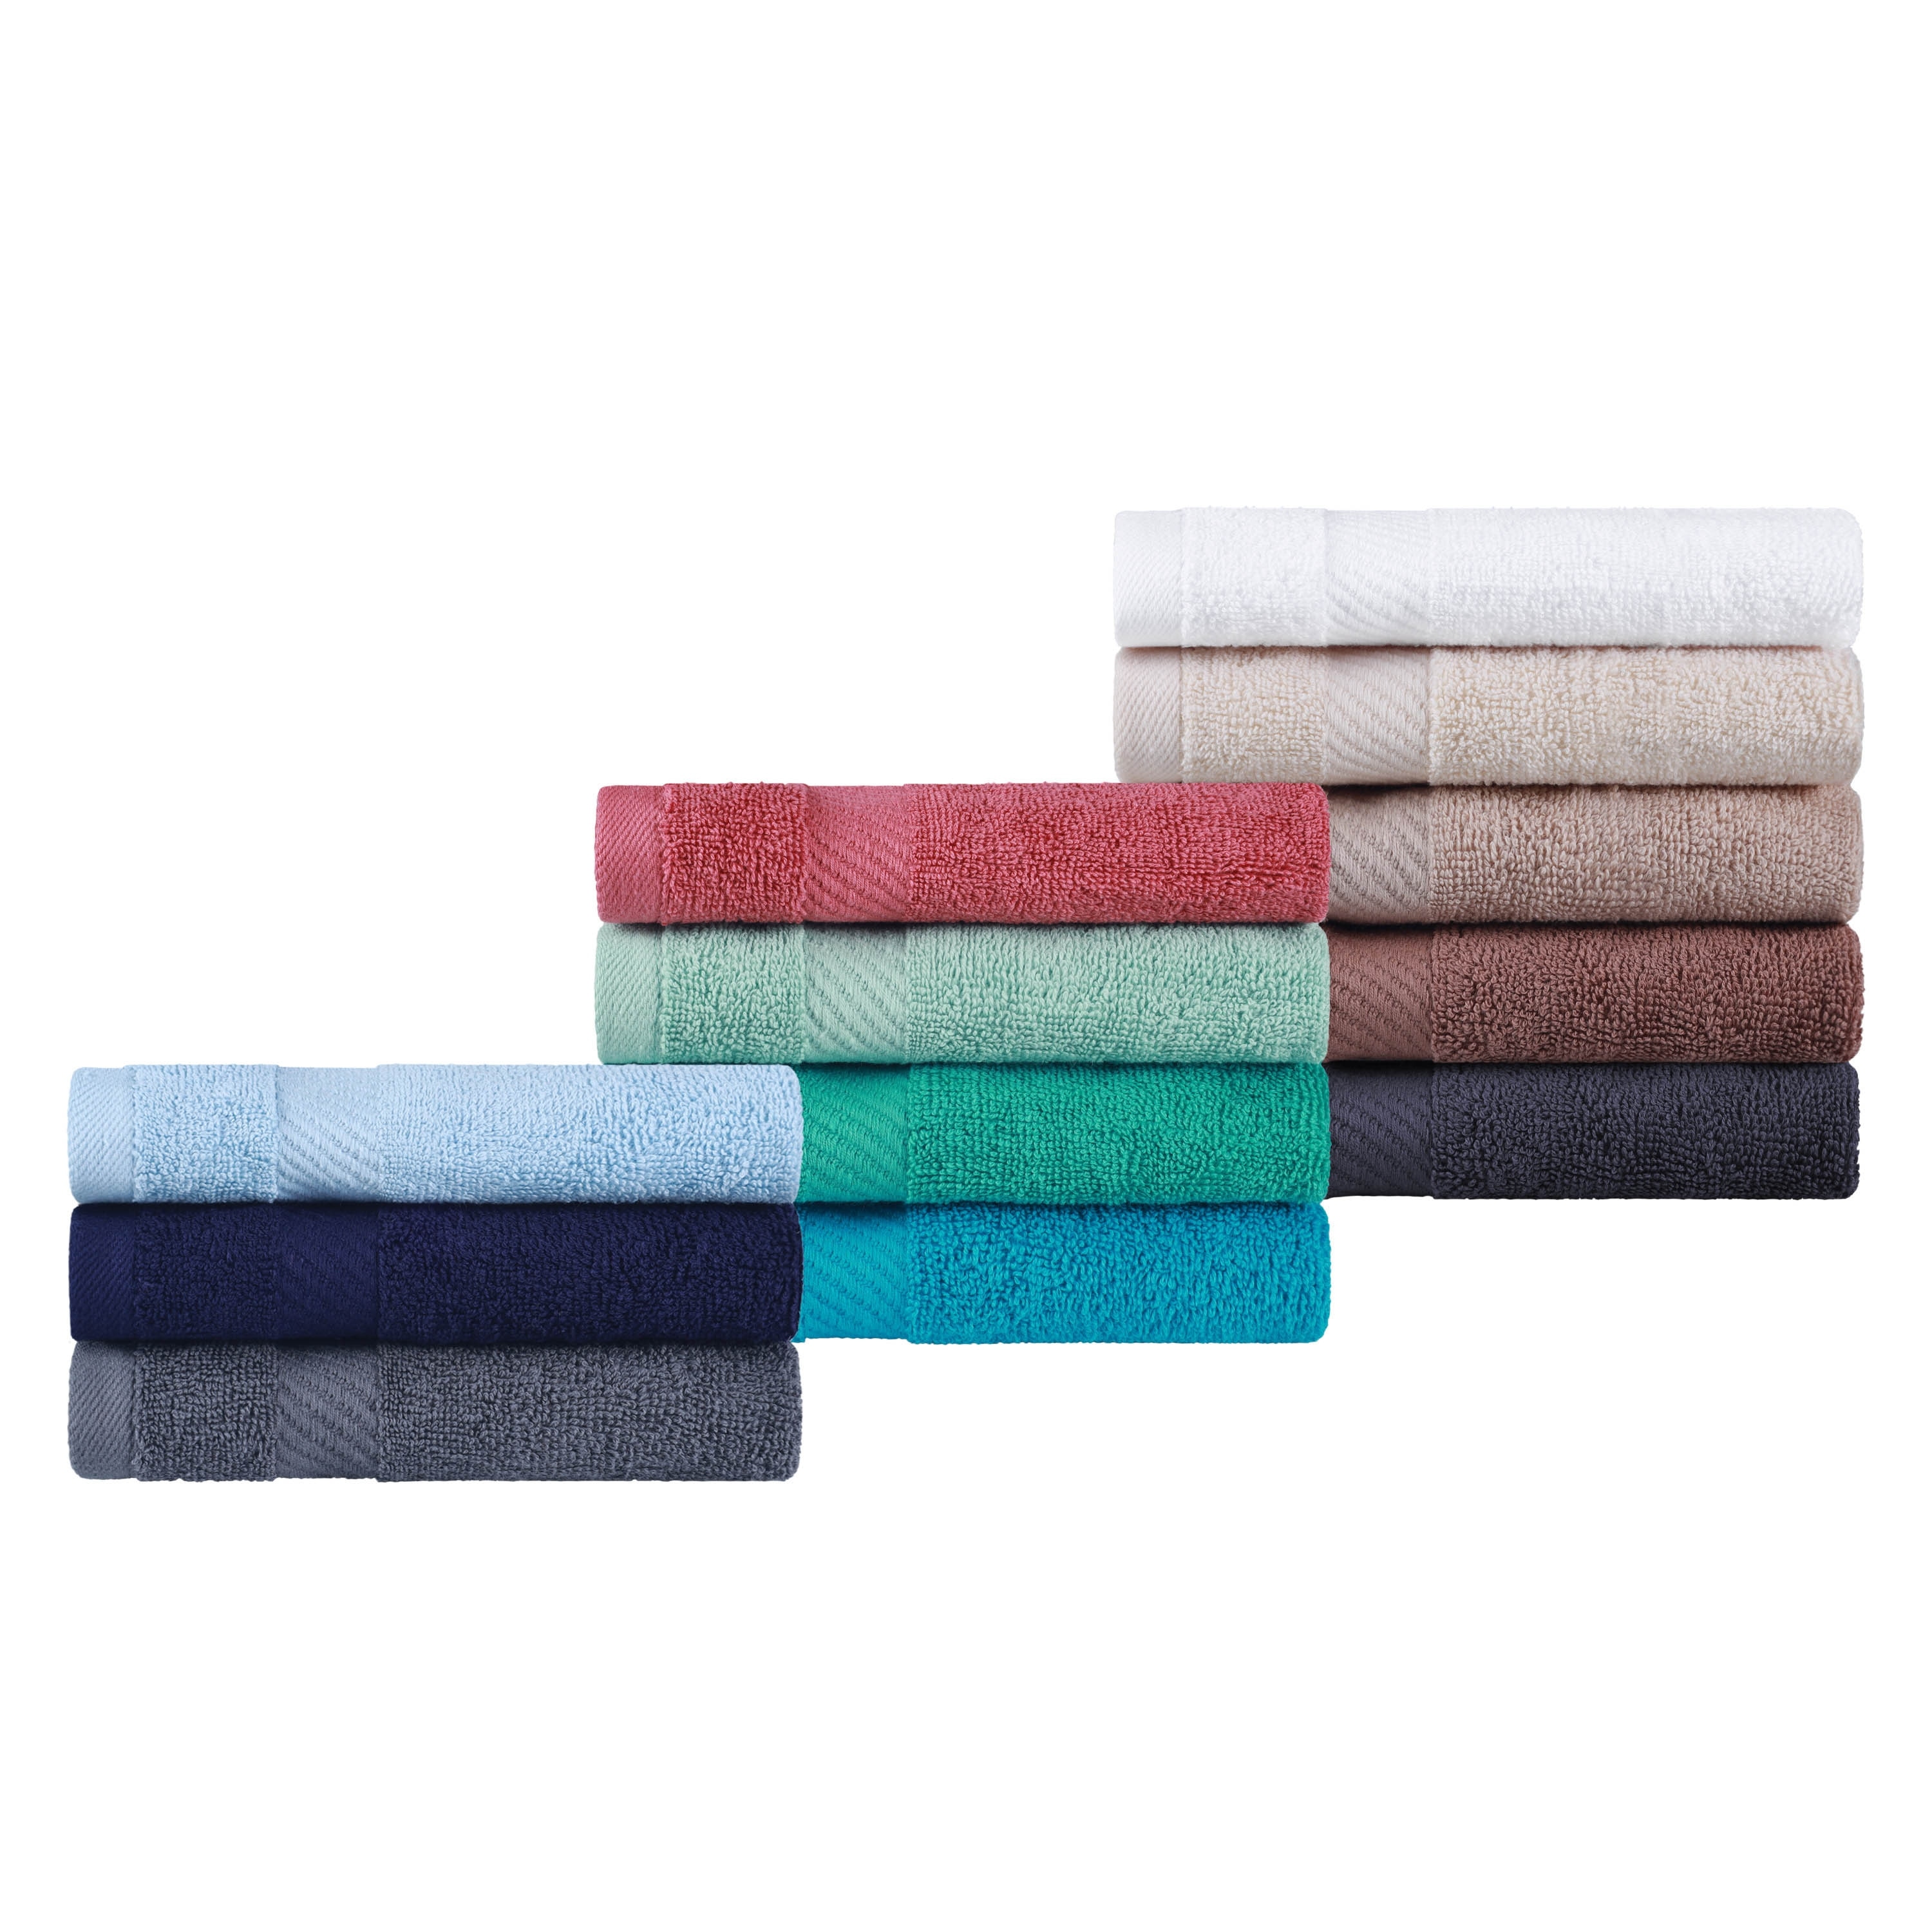 Royal Turkish Towel Luxury Cambridge Cotton Jumbo SPA Bath Sheet